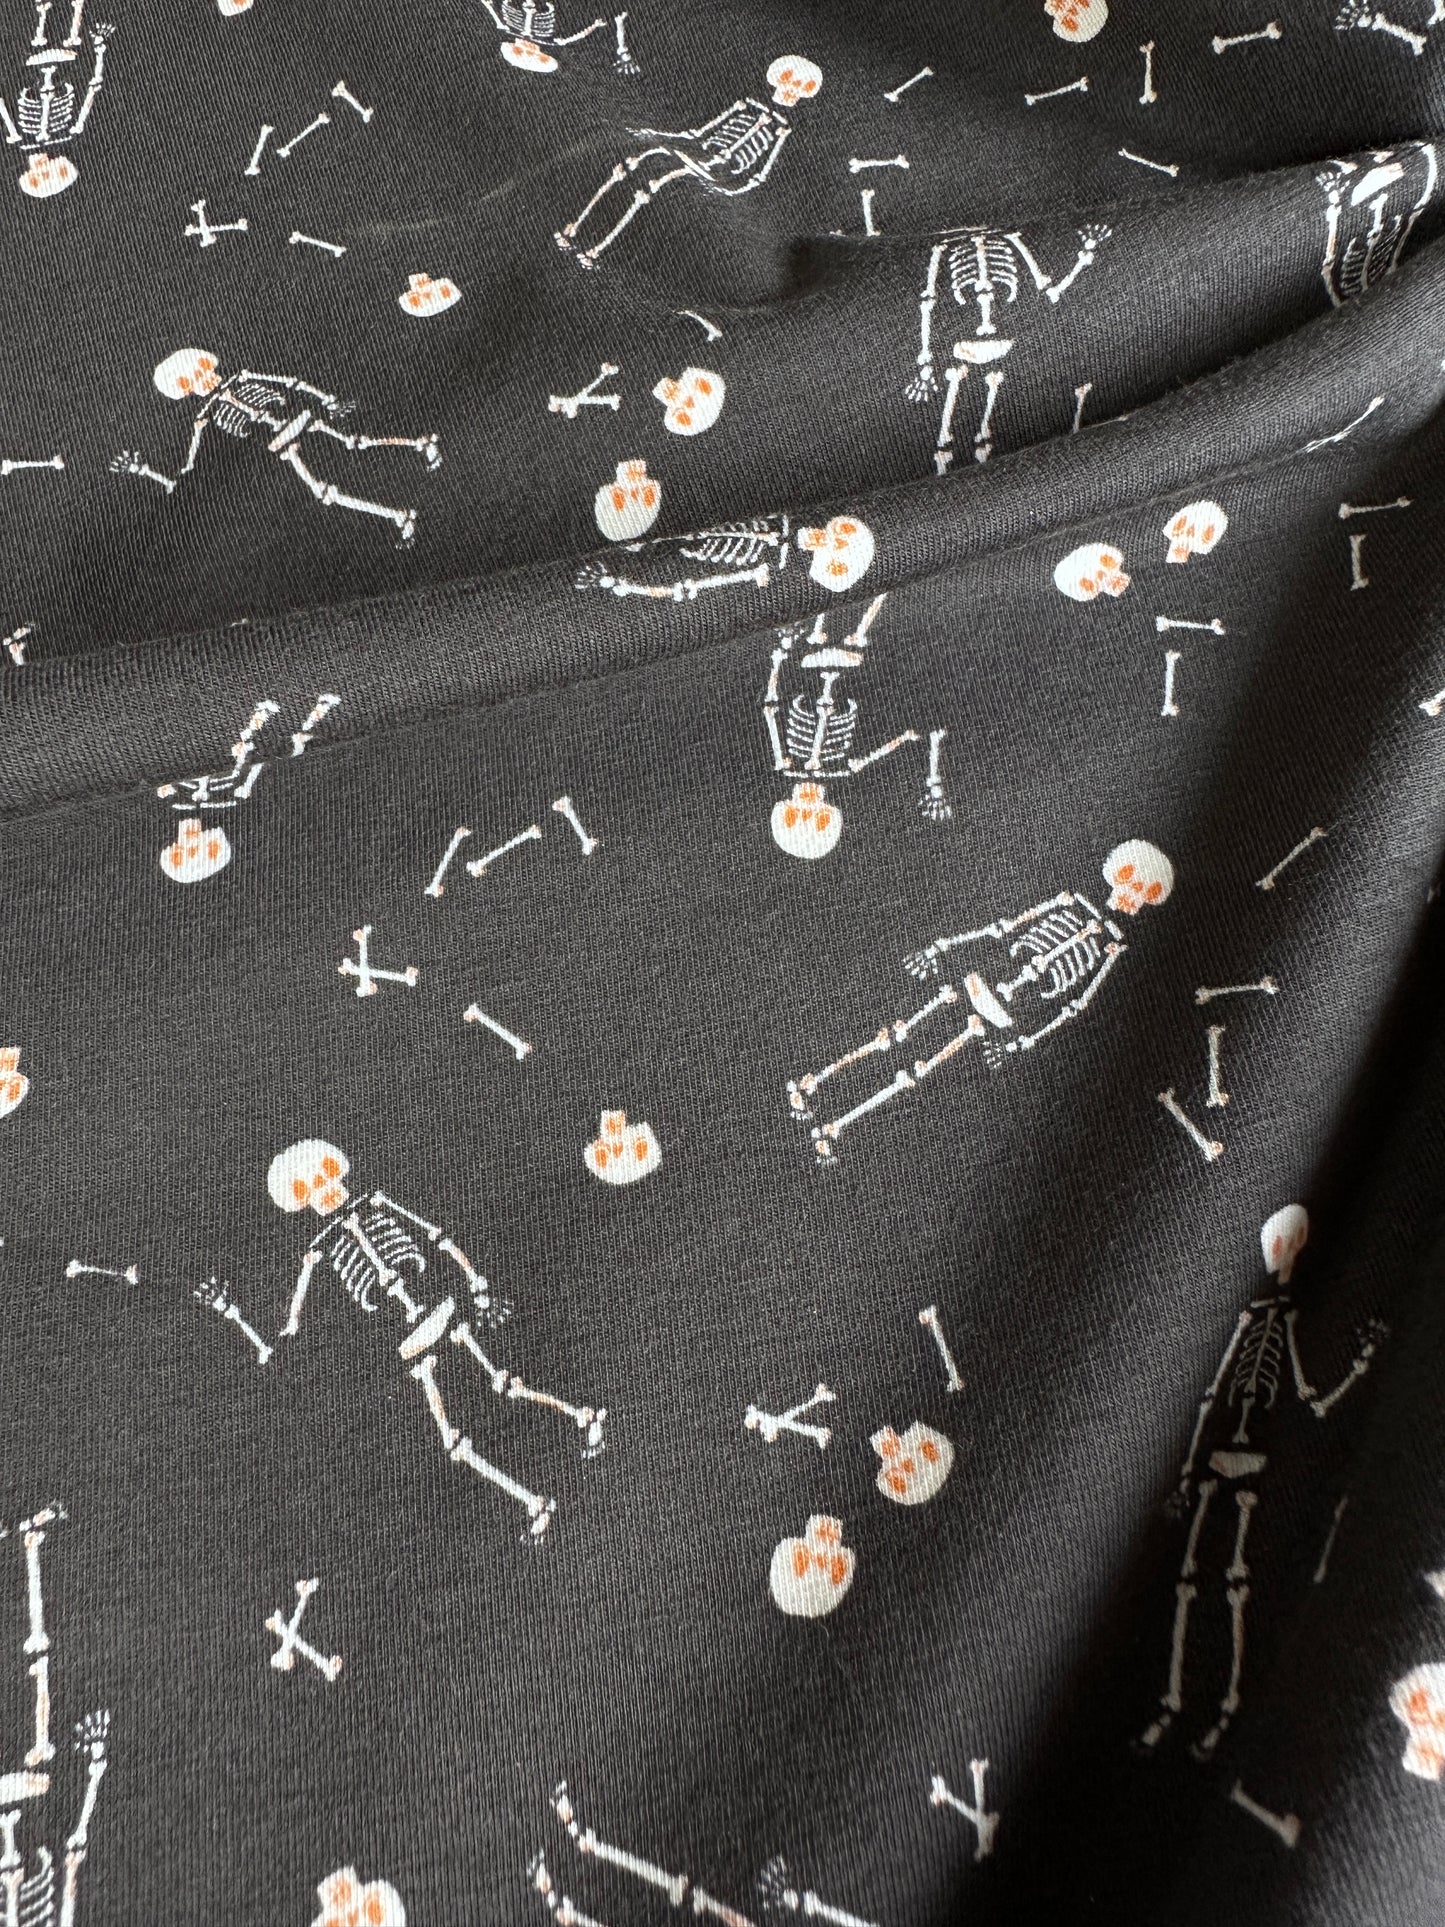 Mister No Body Cotton Jersey Fabric - Art Gallery Fabrics